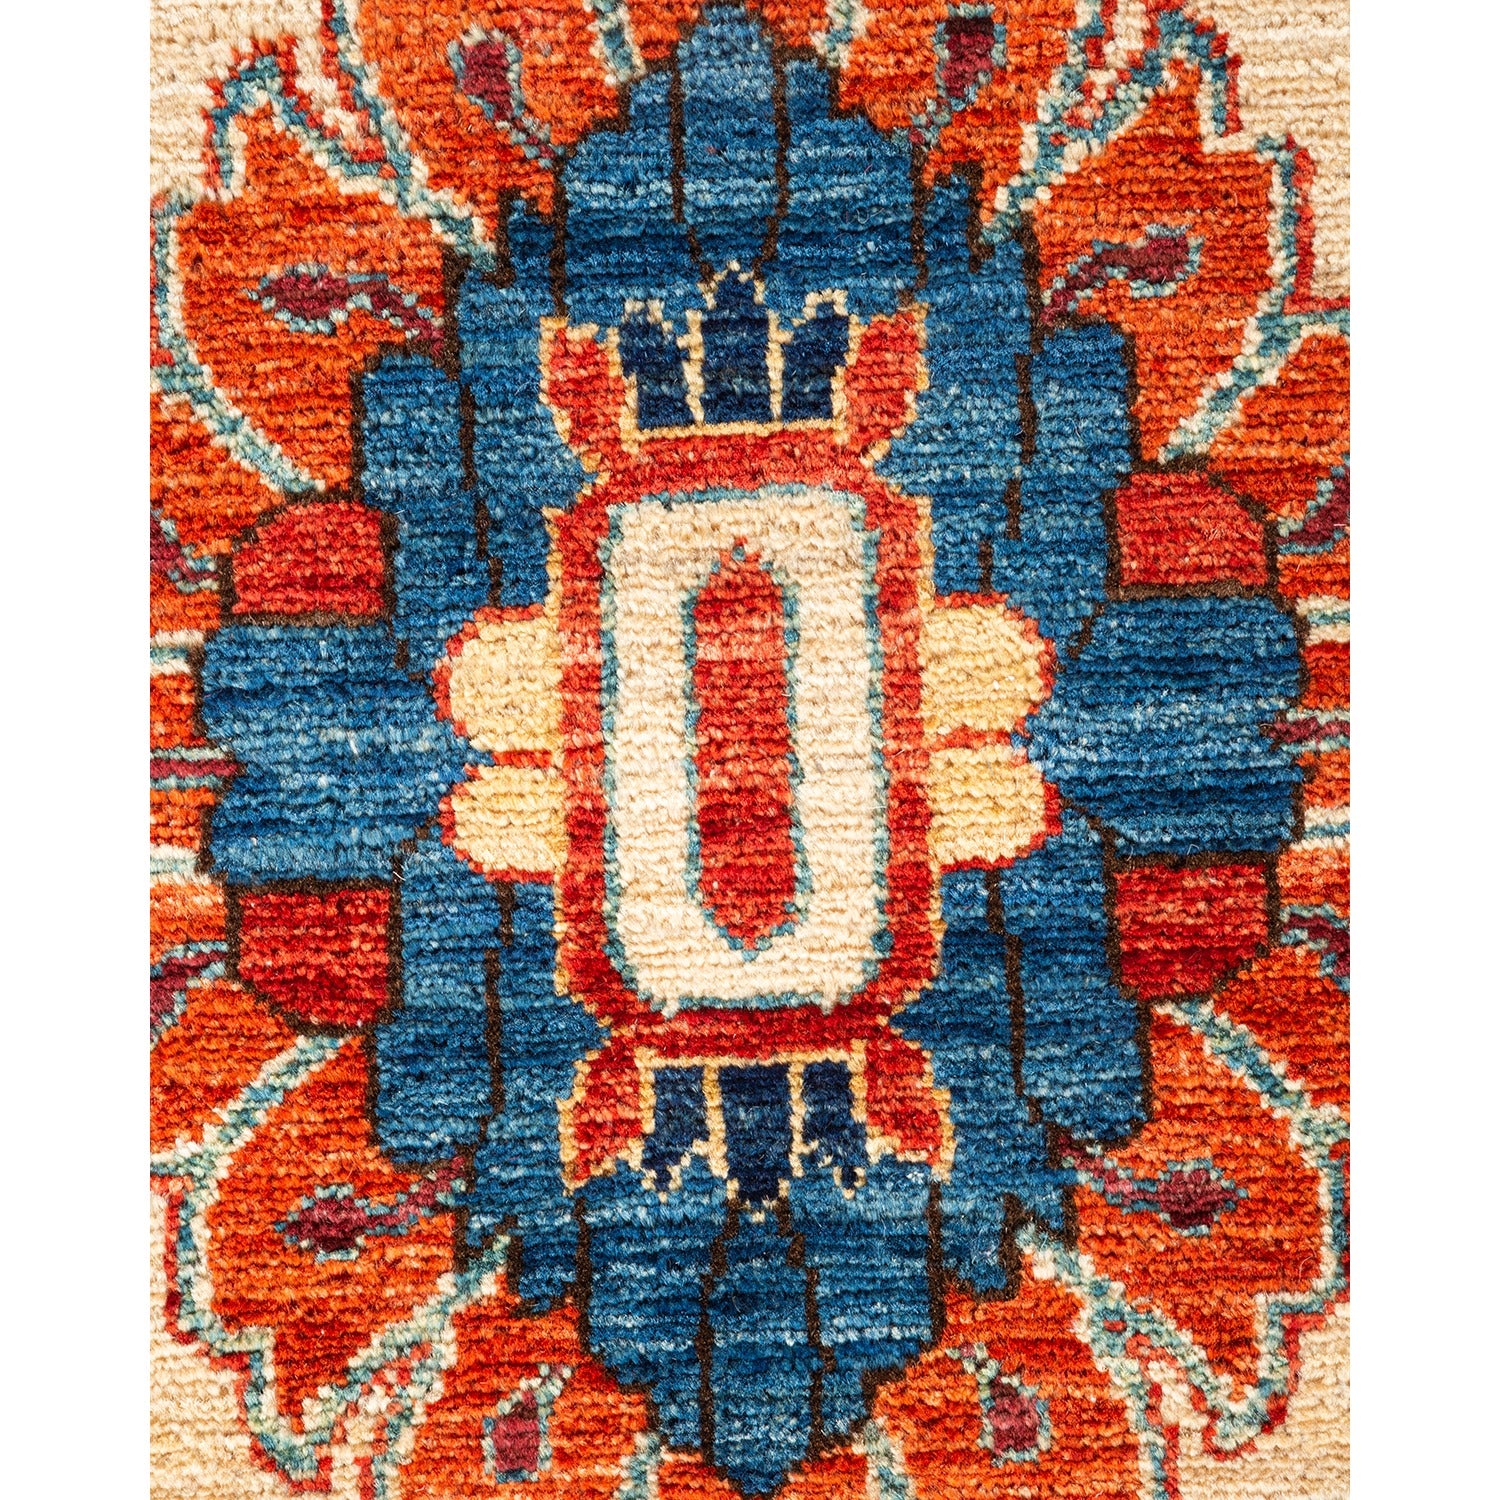 Close-up of a handmade symmetrical carpet with intricate design.